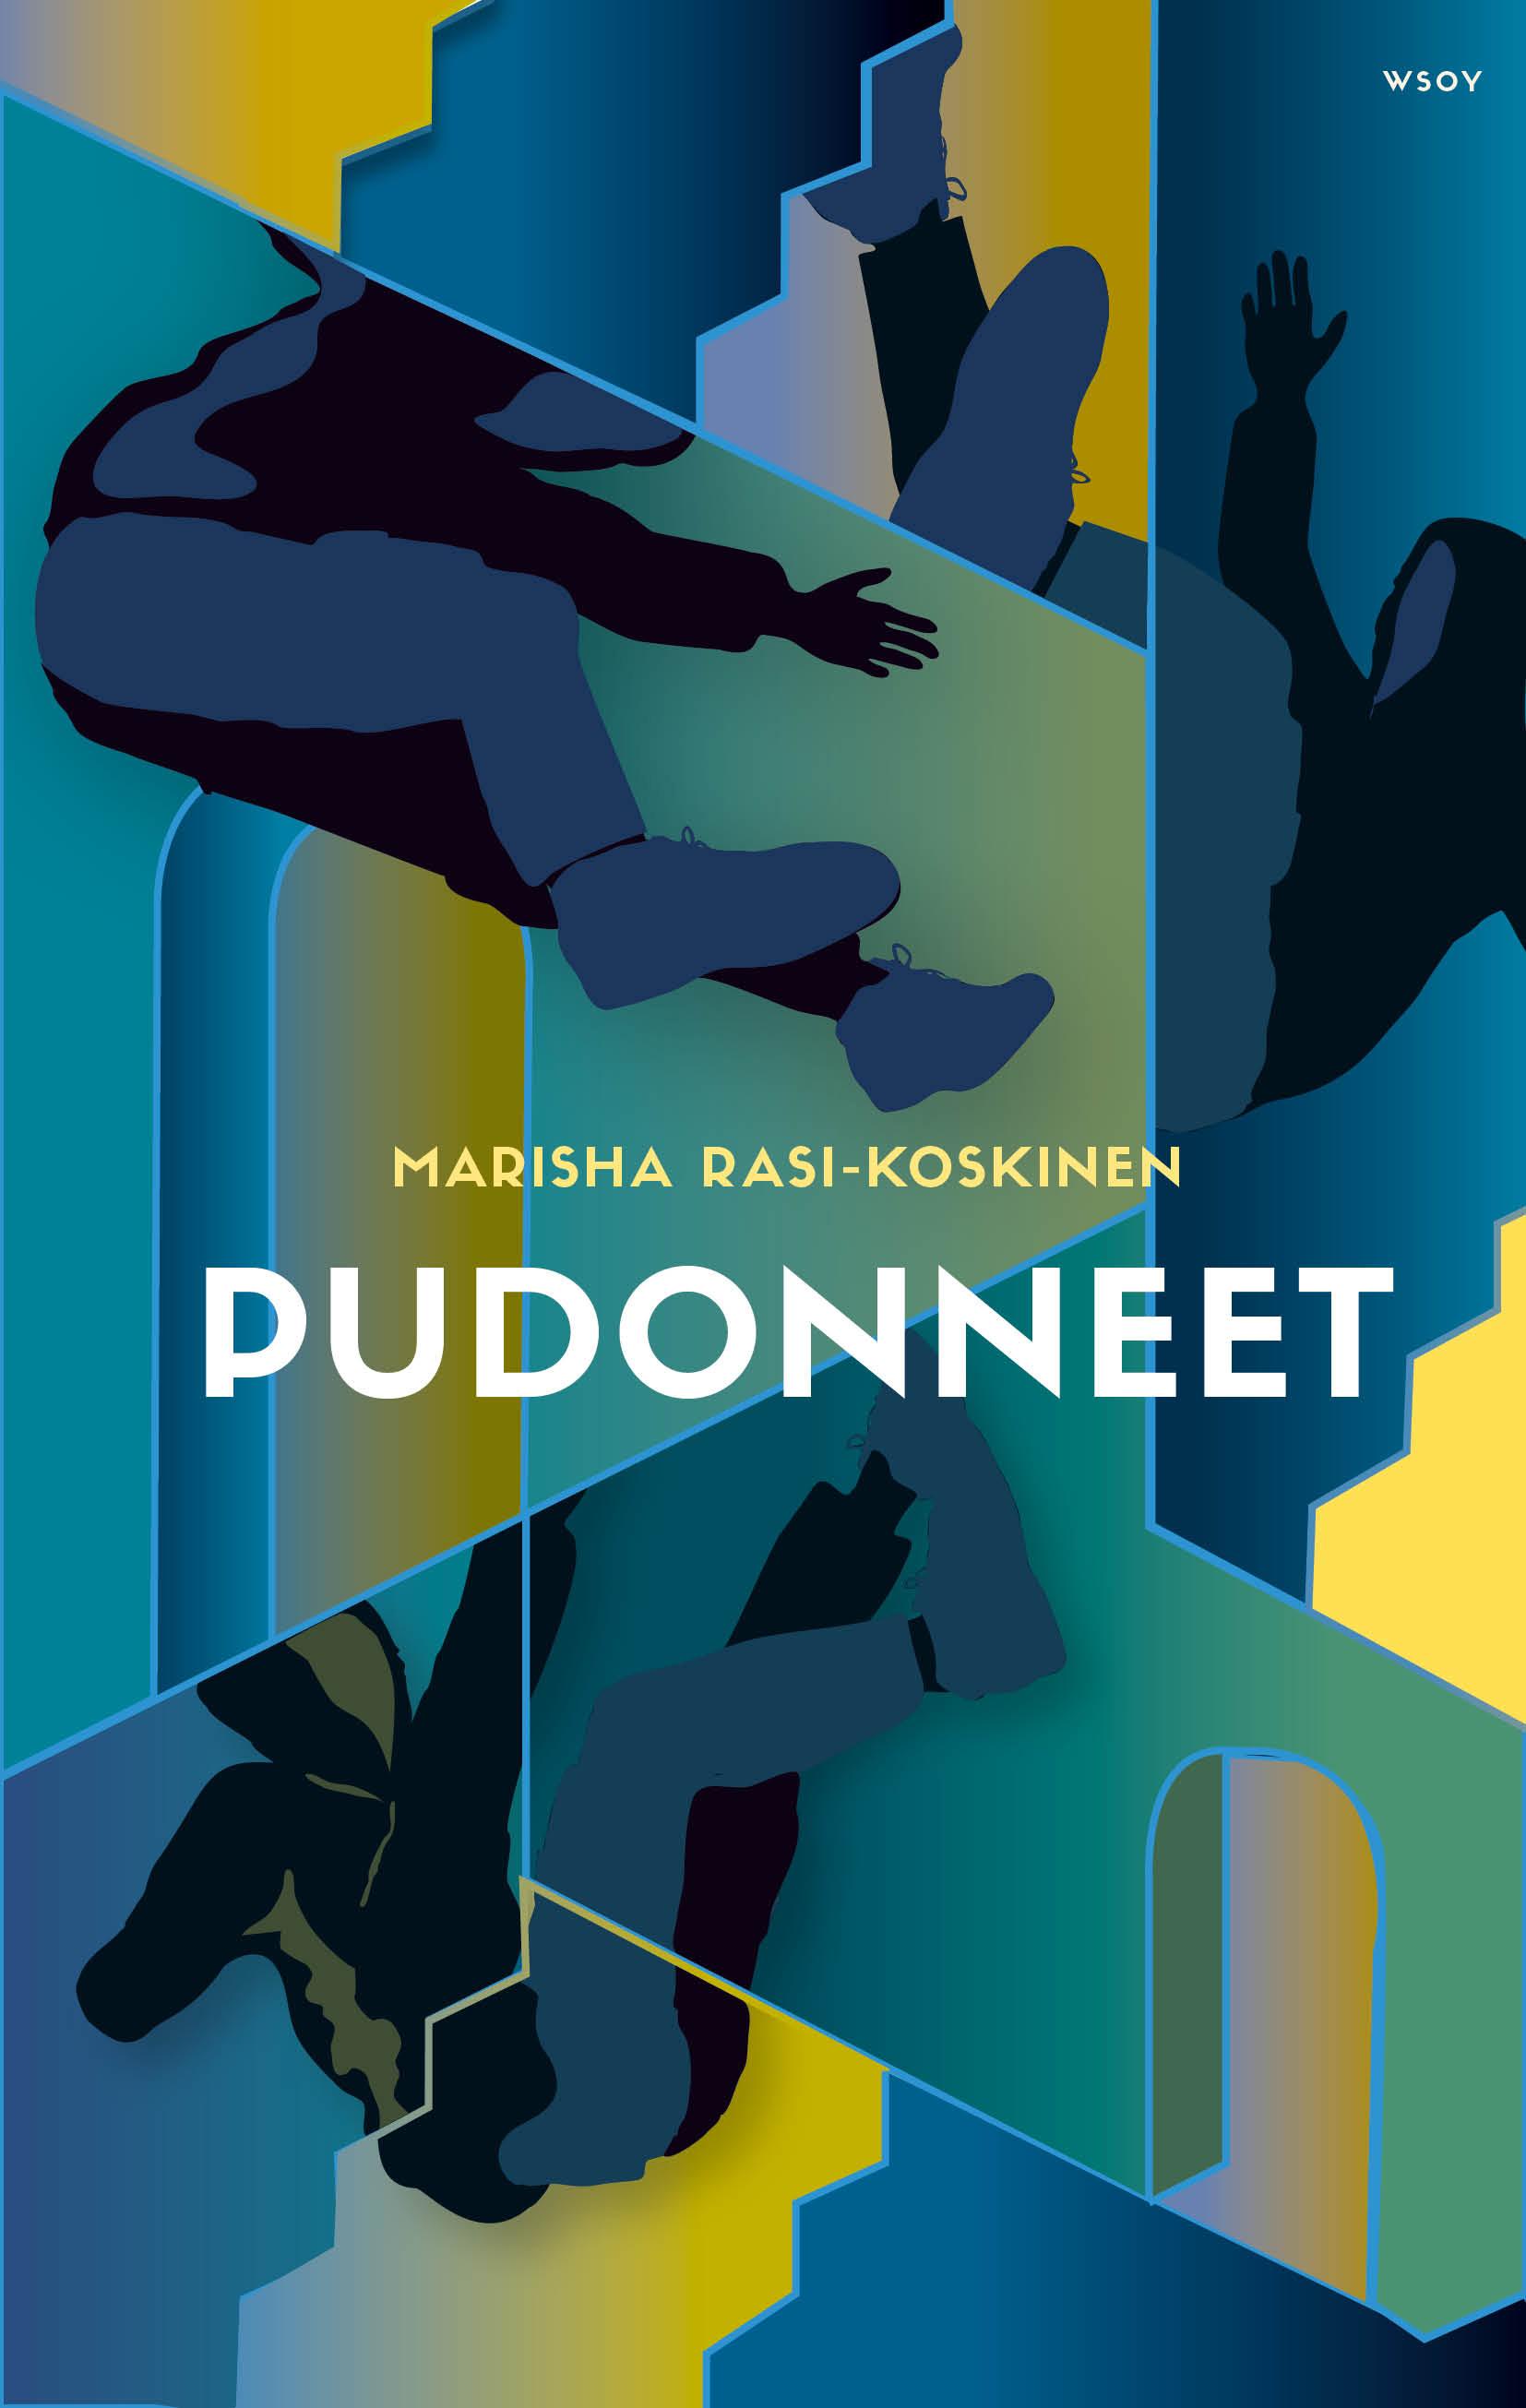 Marisha Rasi-Koskinen: Pudonneet (Hardcover, suomi language, WSOY)